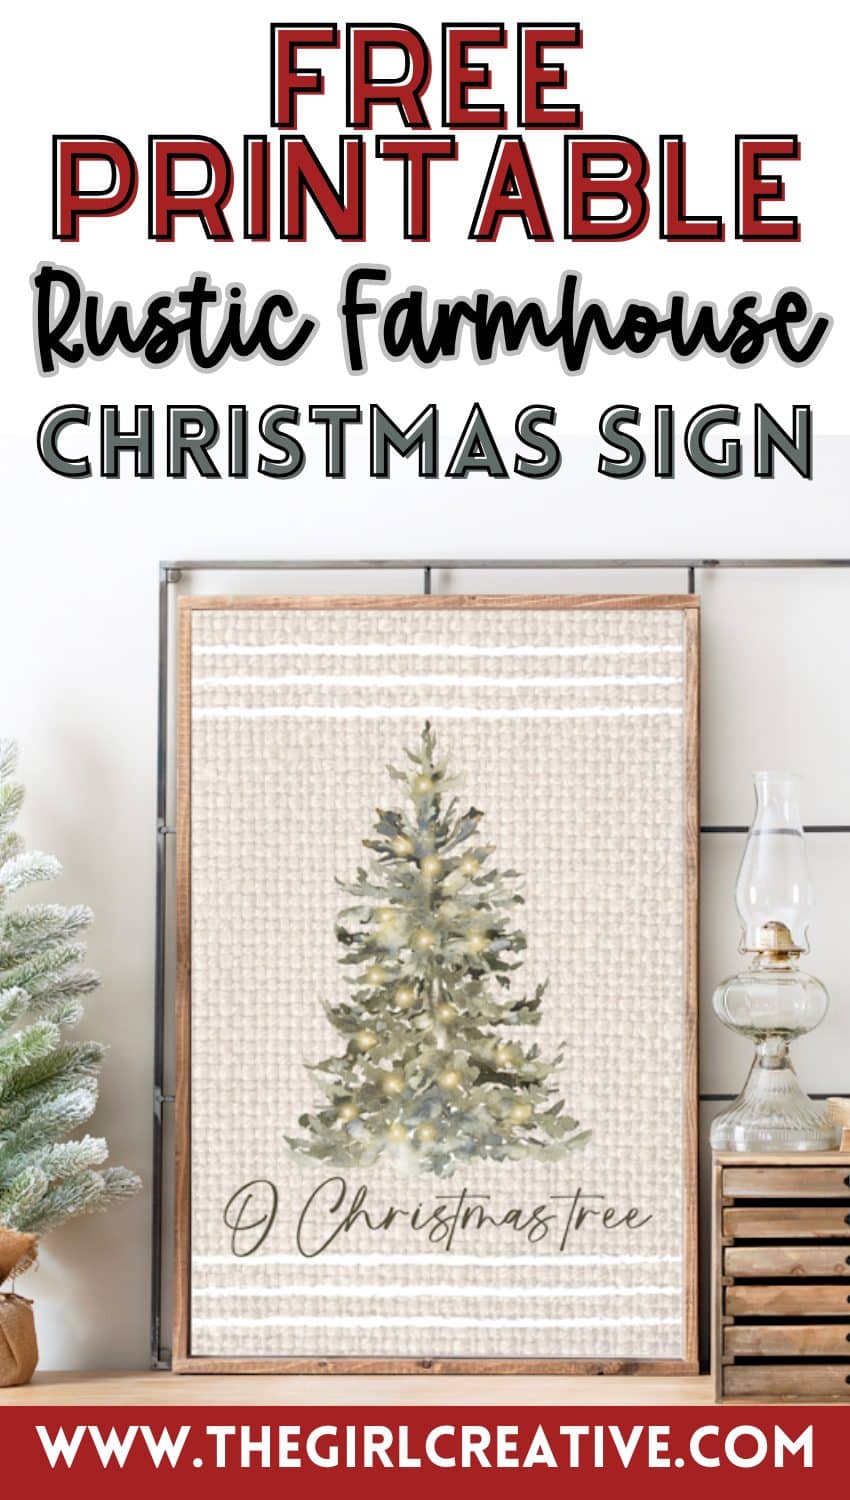 o christmas tree farmhouse printable sign